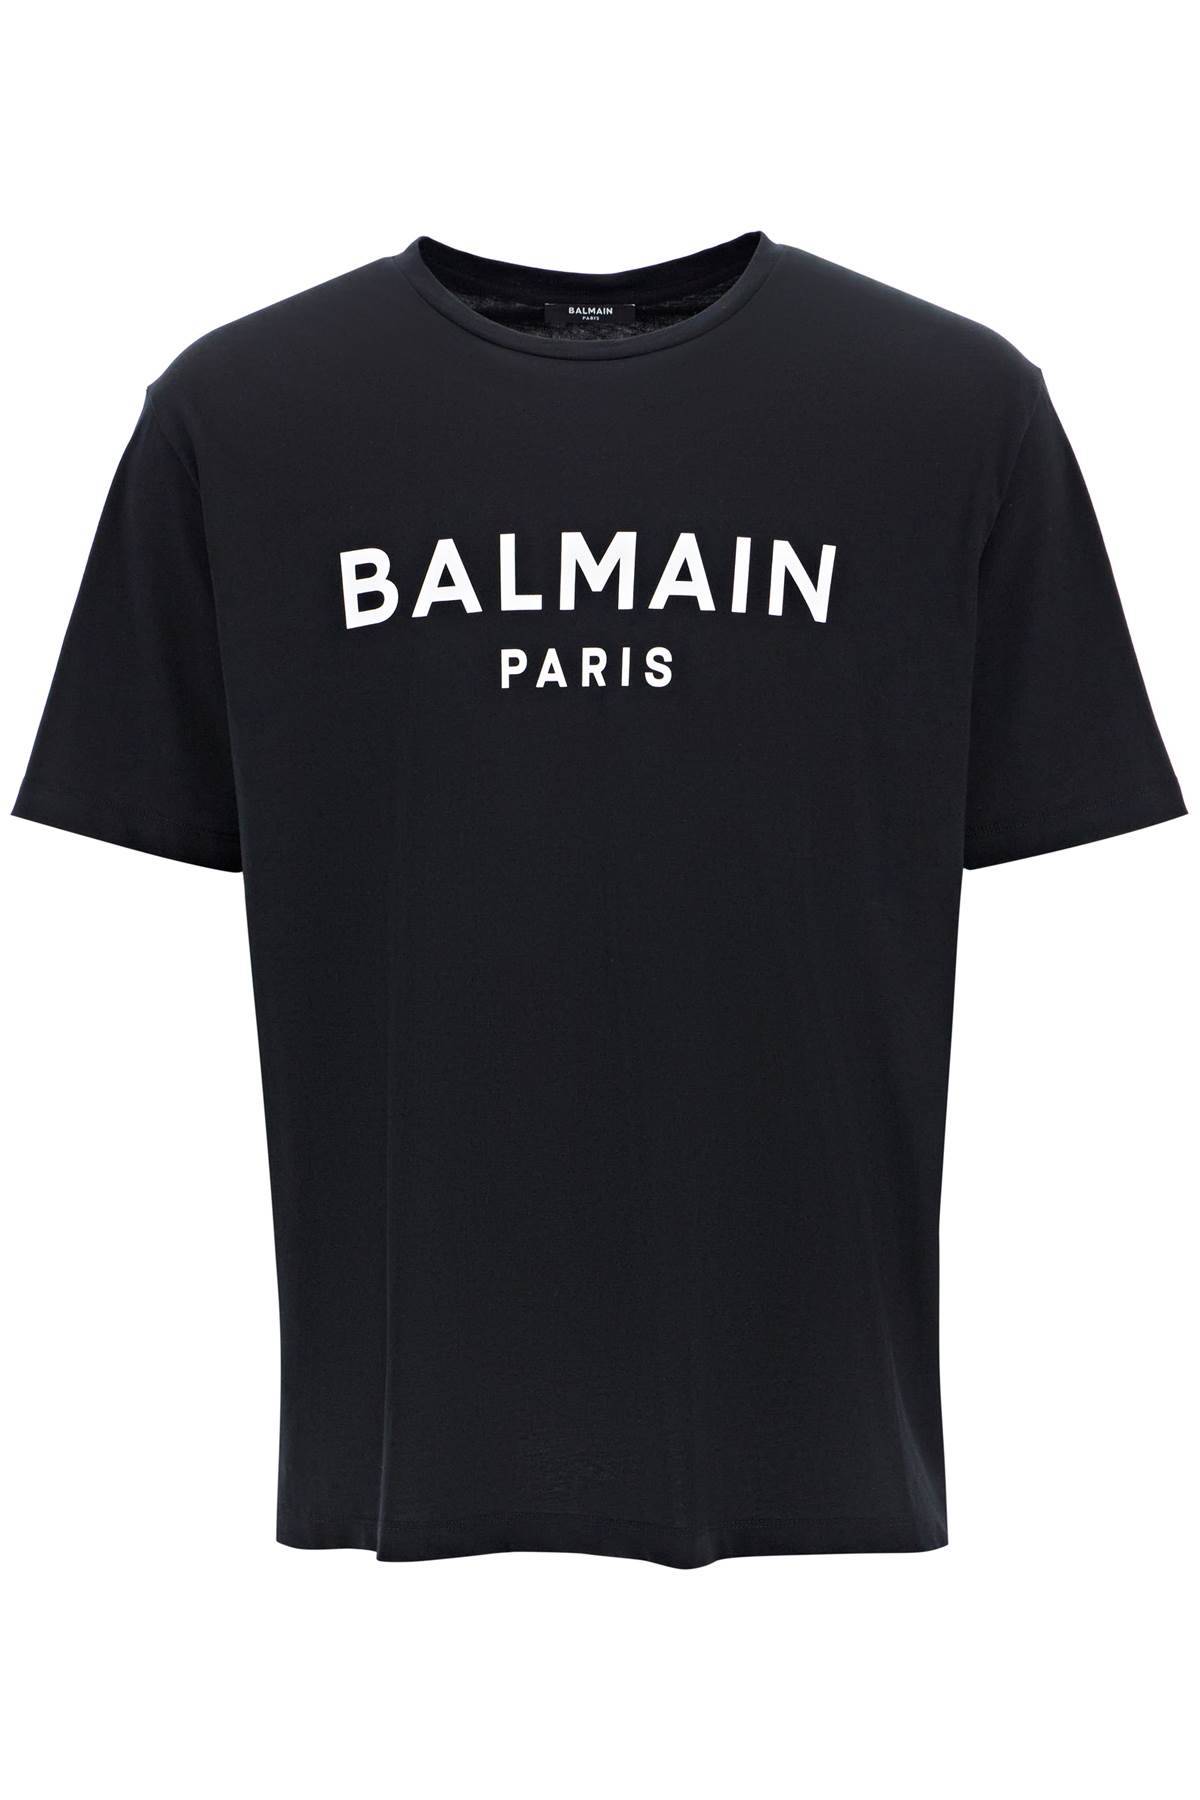 Balmain BALMAIN logo print t-shirt